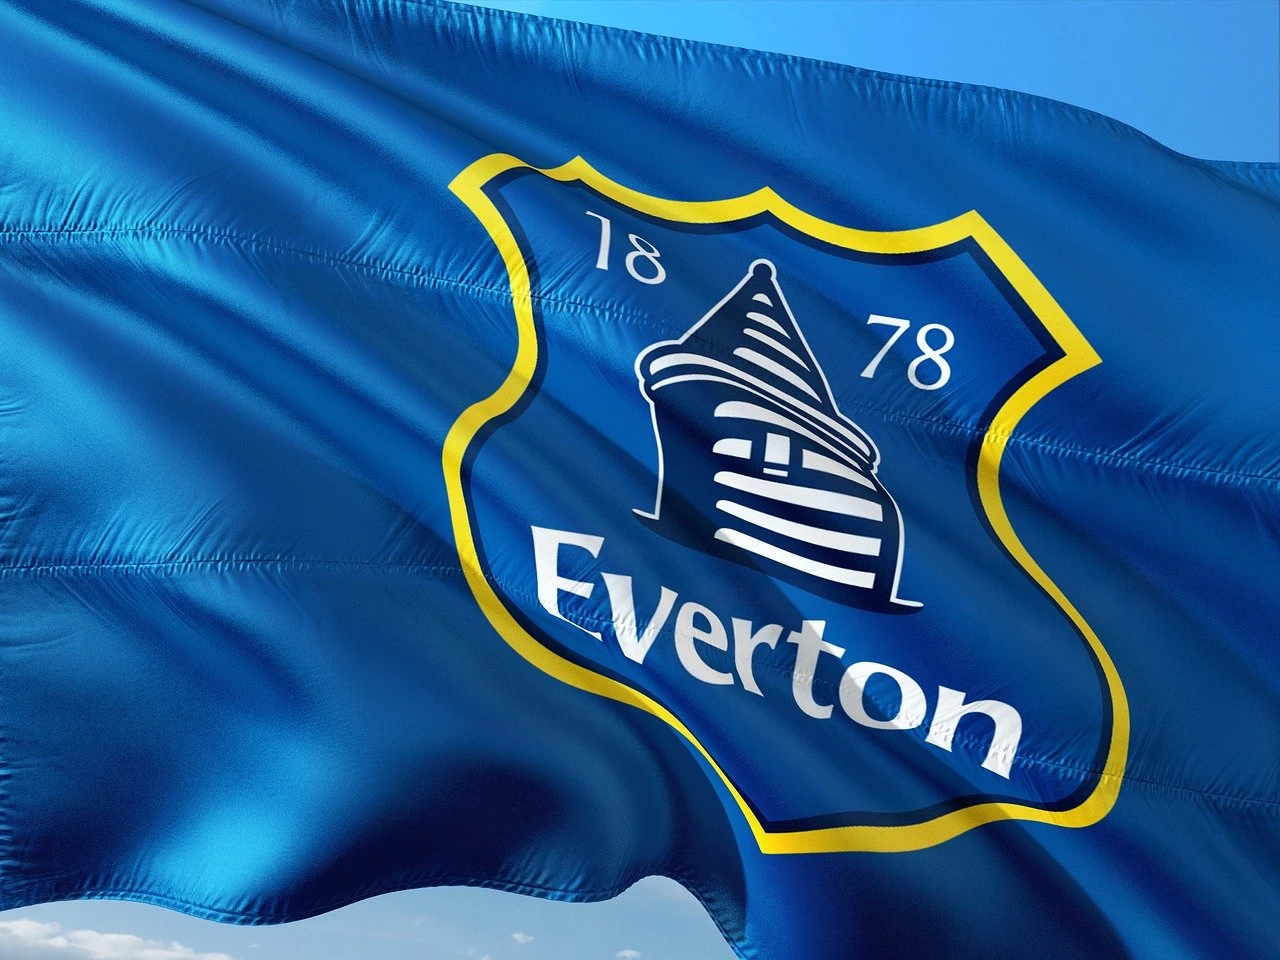 Everton Logo History